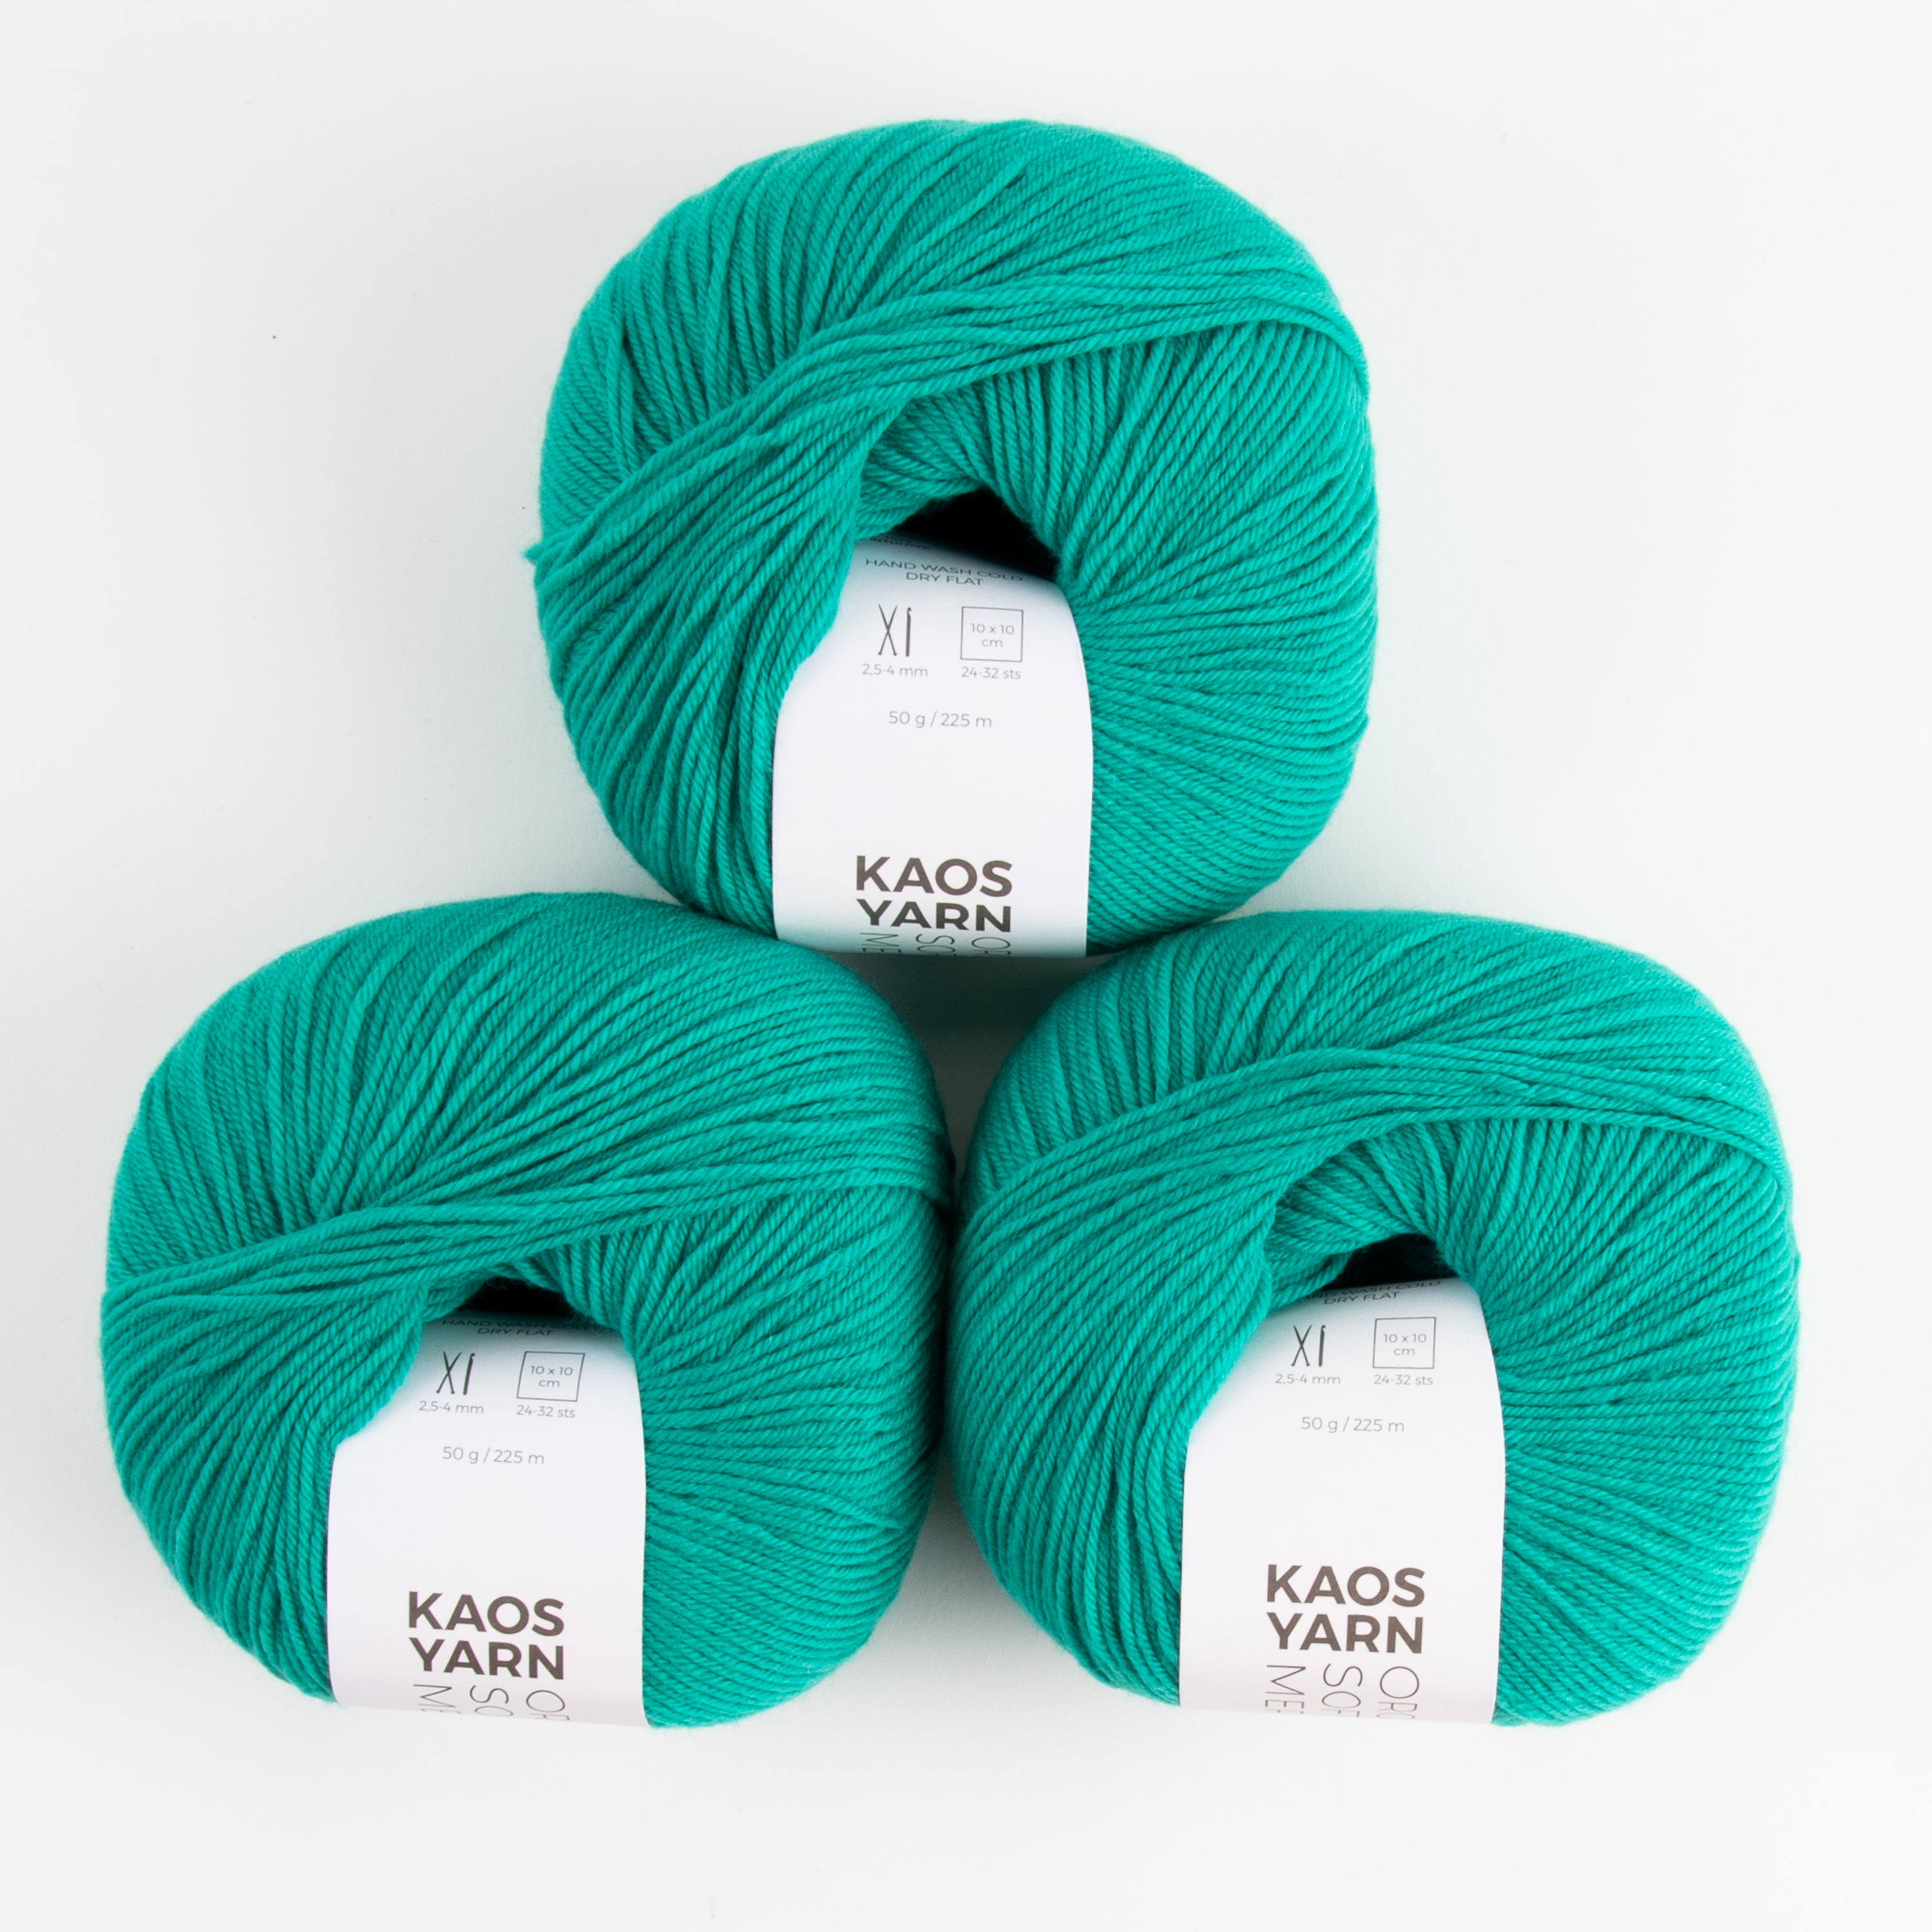 Yarn Non-superwash Sustainable Merino/nylon Sock Yarn 237yds Waverly  Incredibly Soft Yarn for Knitting, Crochet Eco Friendly Ready to Ship 